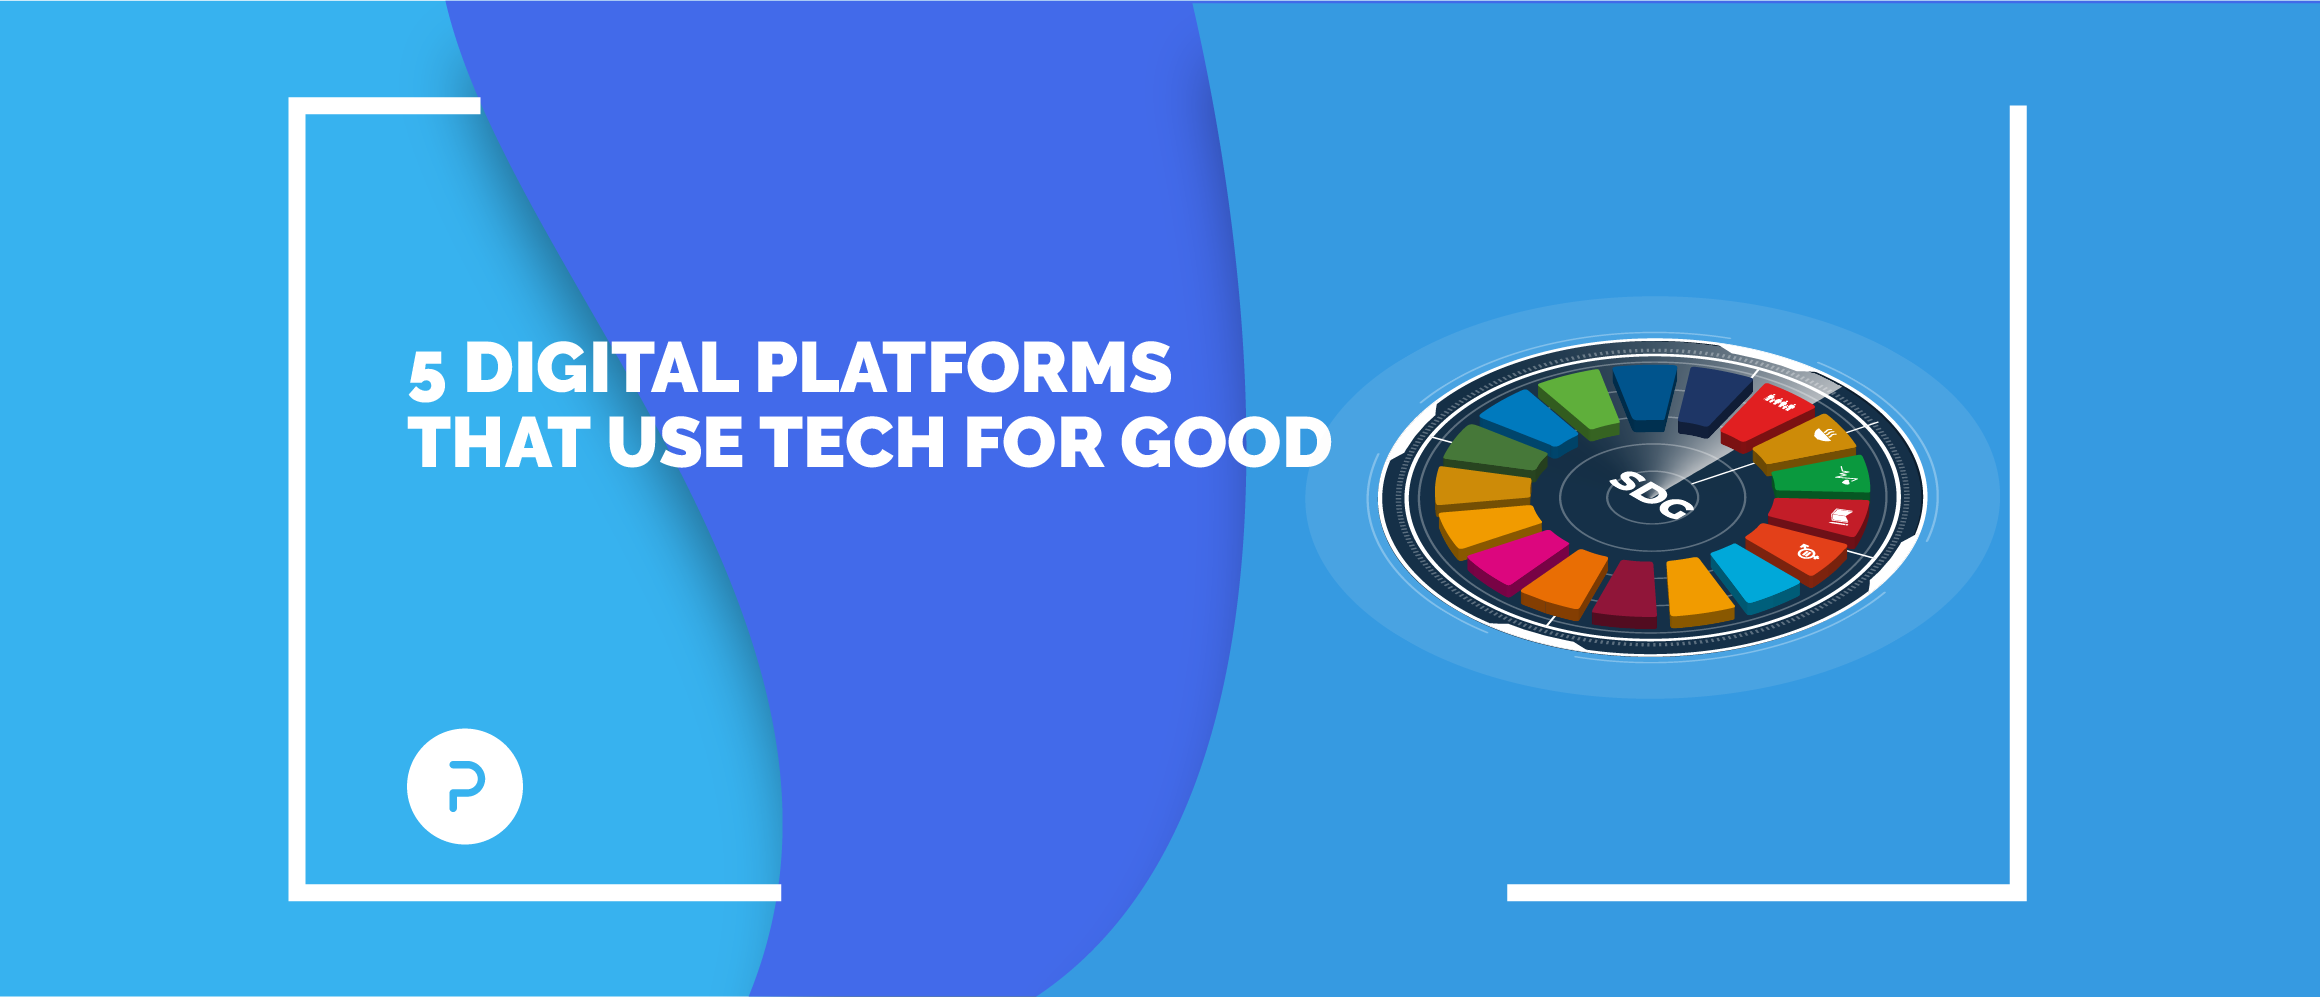 5 digital platforms that use tech for good